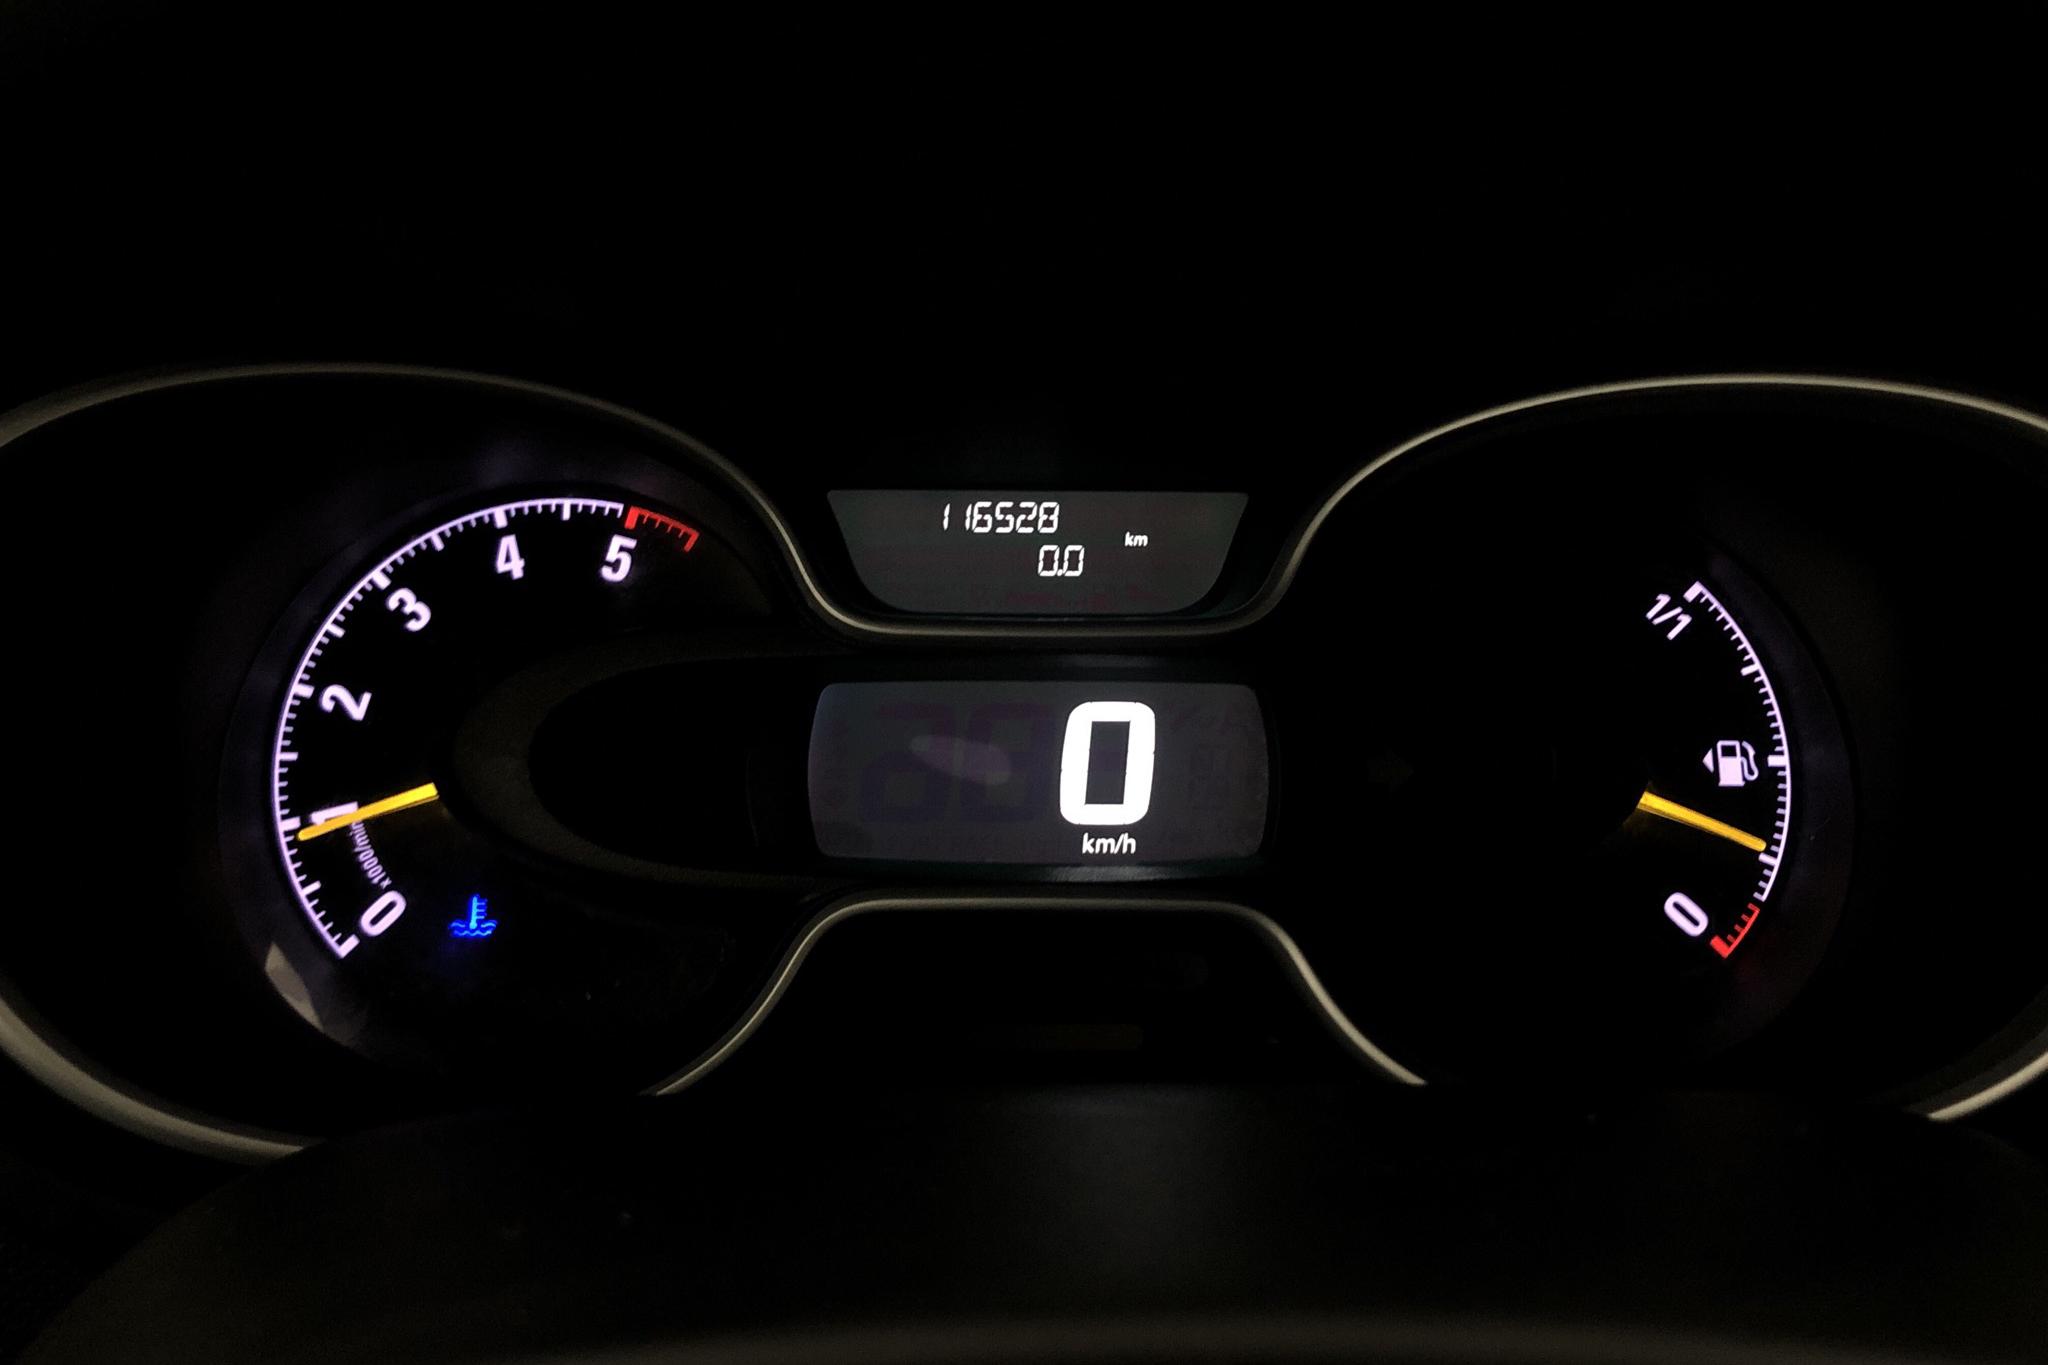 Opel Vivaro 1.6 BITURBO (140hk) - 116 530 km - Manual - white - 2016